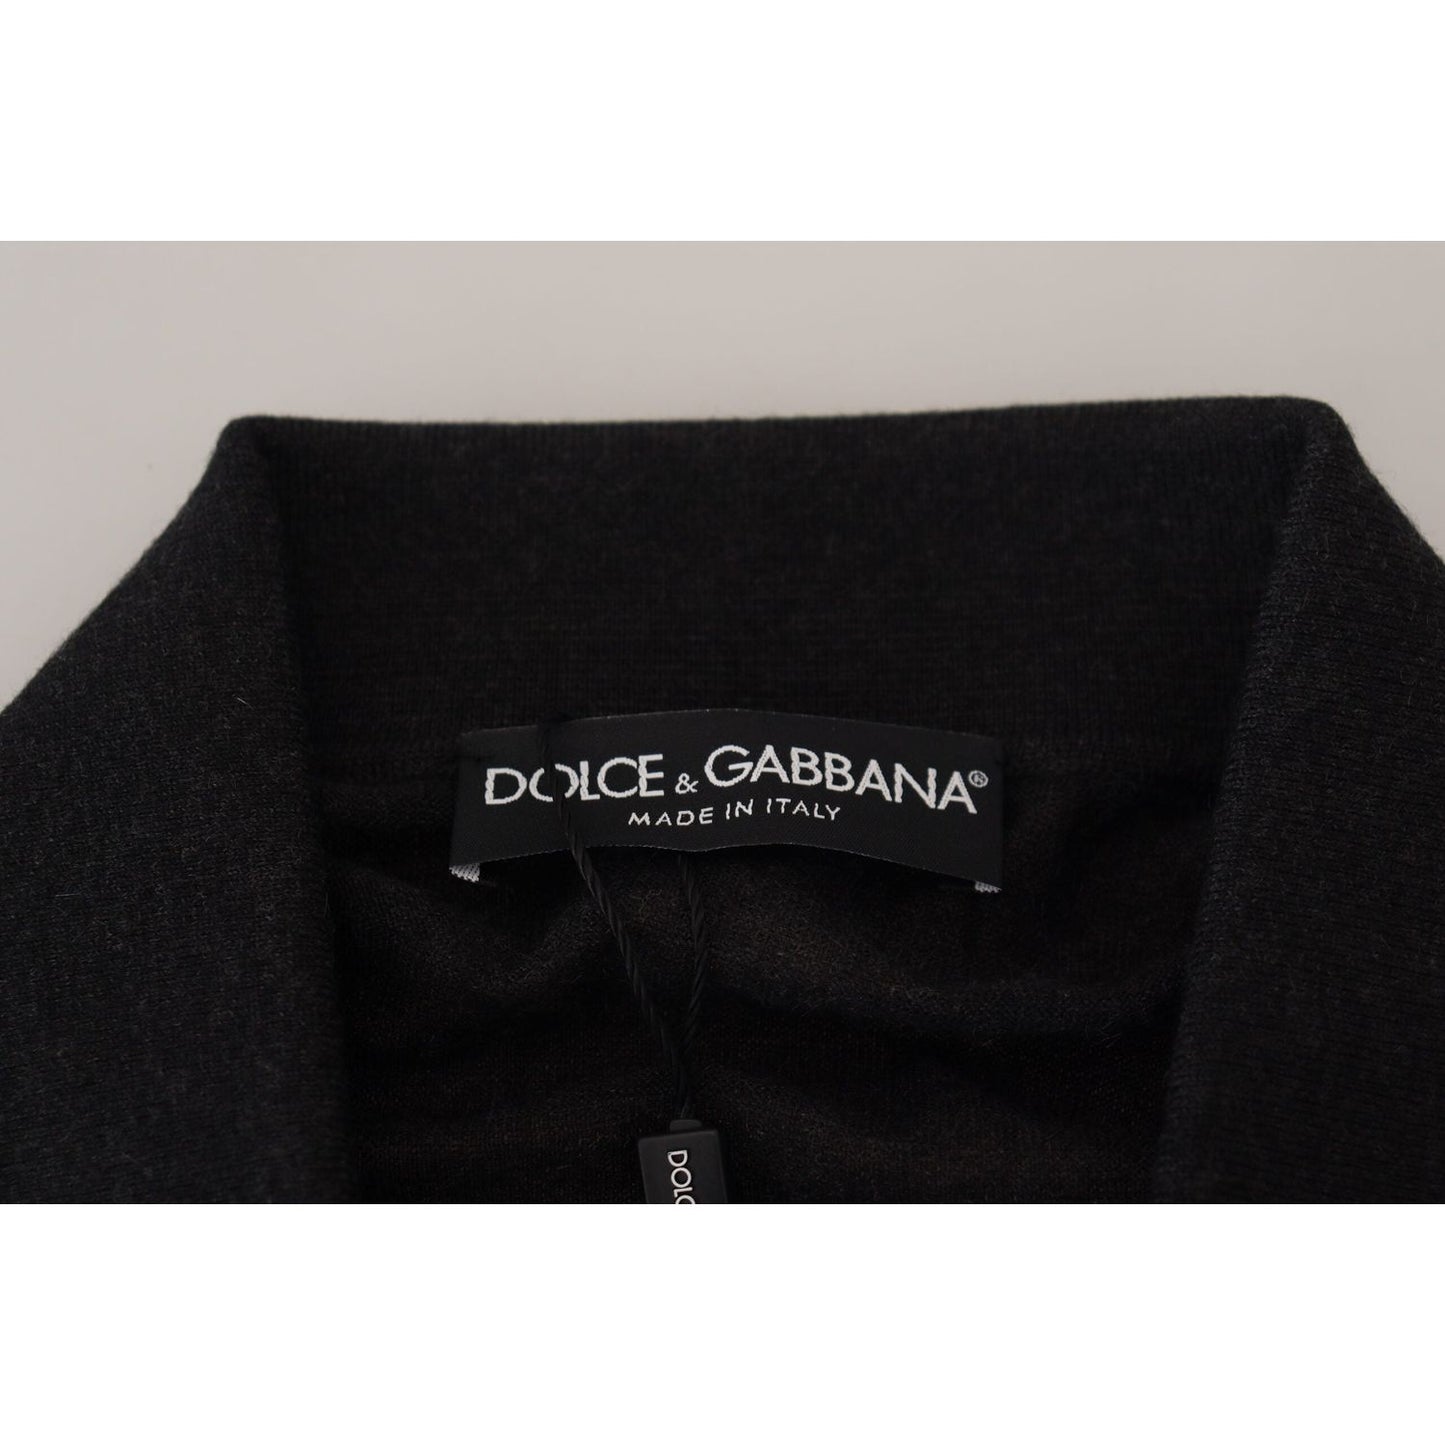 Dolce & Gabbana Elegant Black Cashmere Pullover Sweater black-cashmere-collared-pullover-sweater